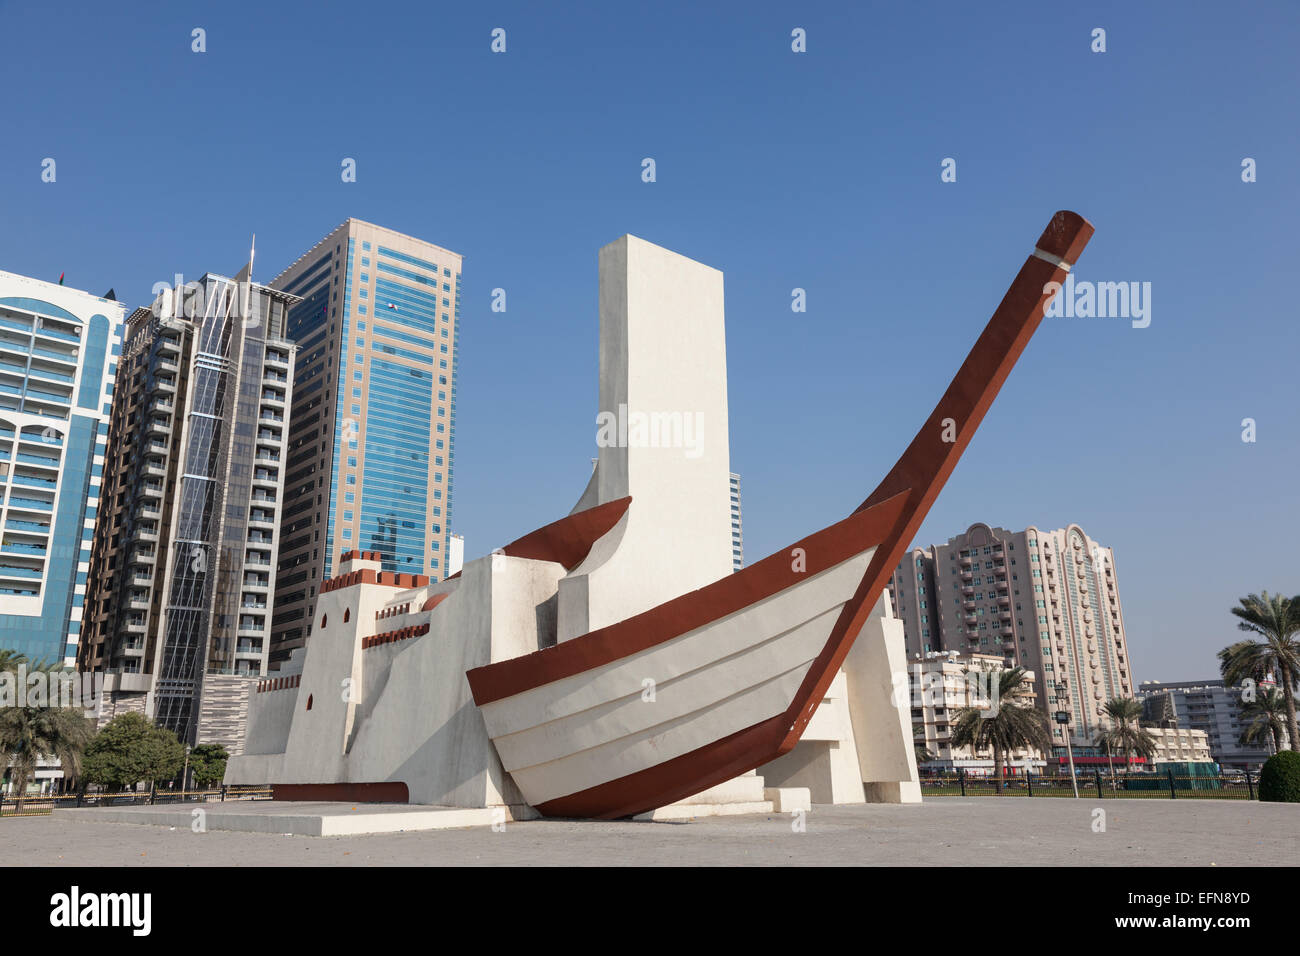 Nave scultura nella città di Sharjah Emirati Arabi Uniti Foto Stock